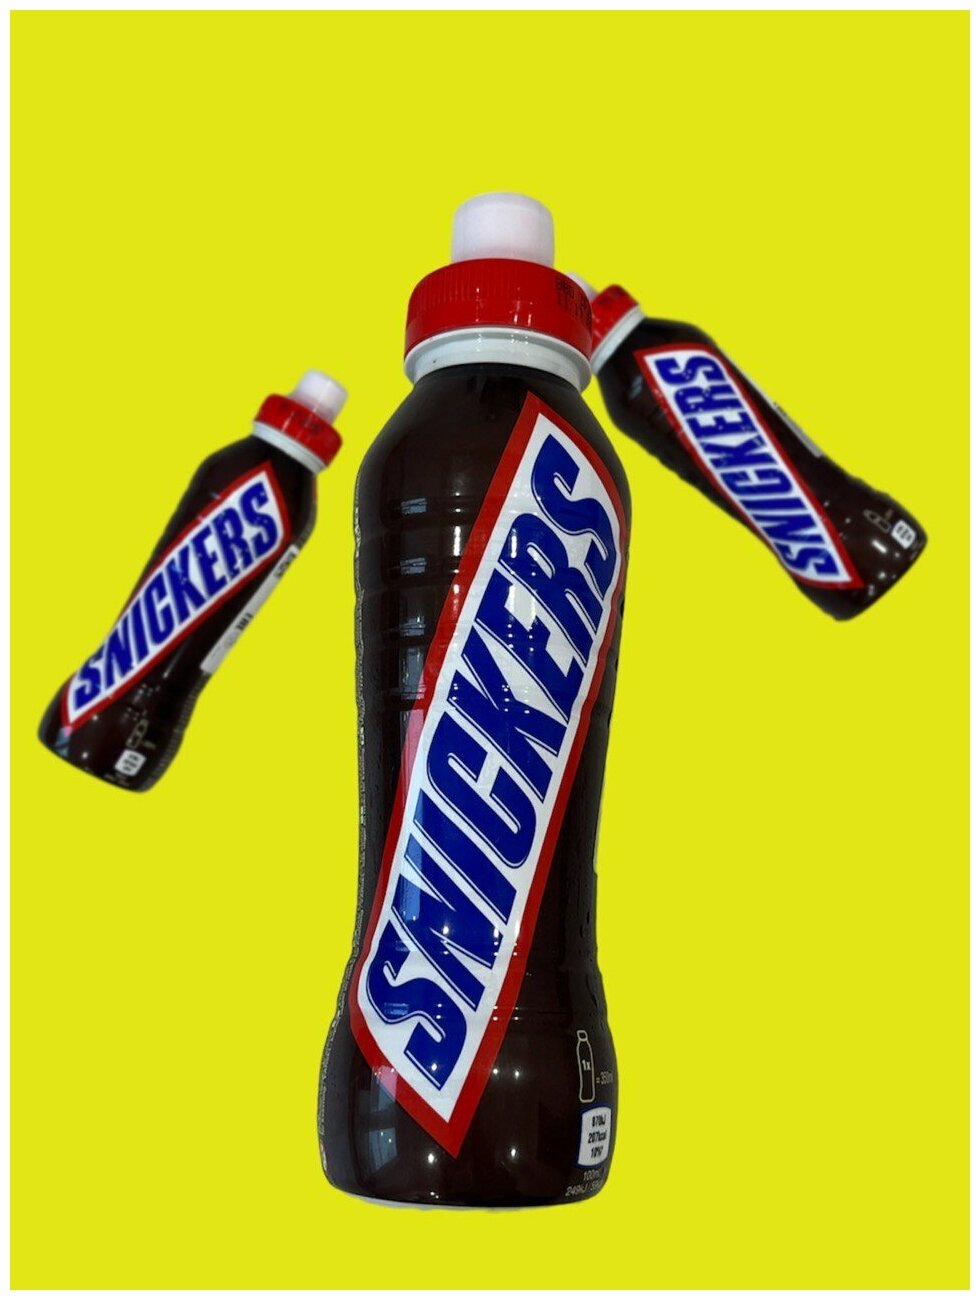 Молочный напиток Snickers со вкусом шоколада, орехов и карамели Сникерс 350мл - фотография № 1